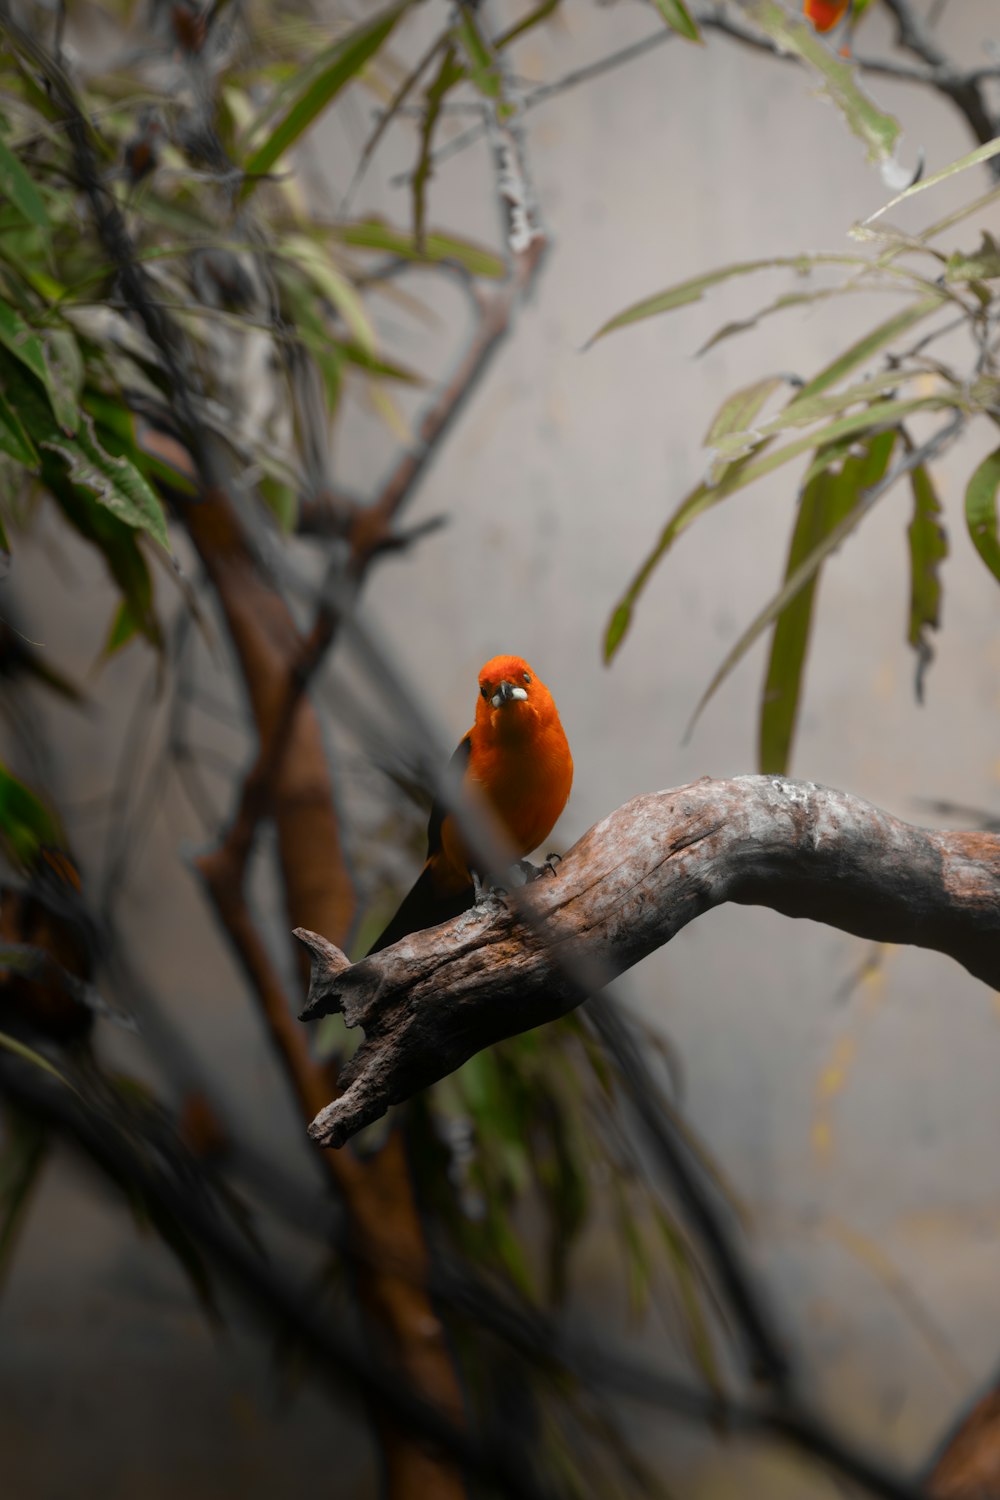 a small orange bird sitting on a tree branch